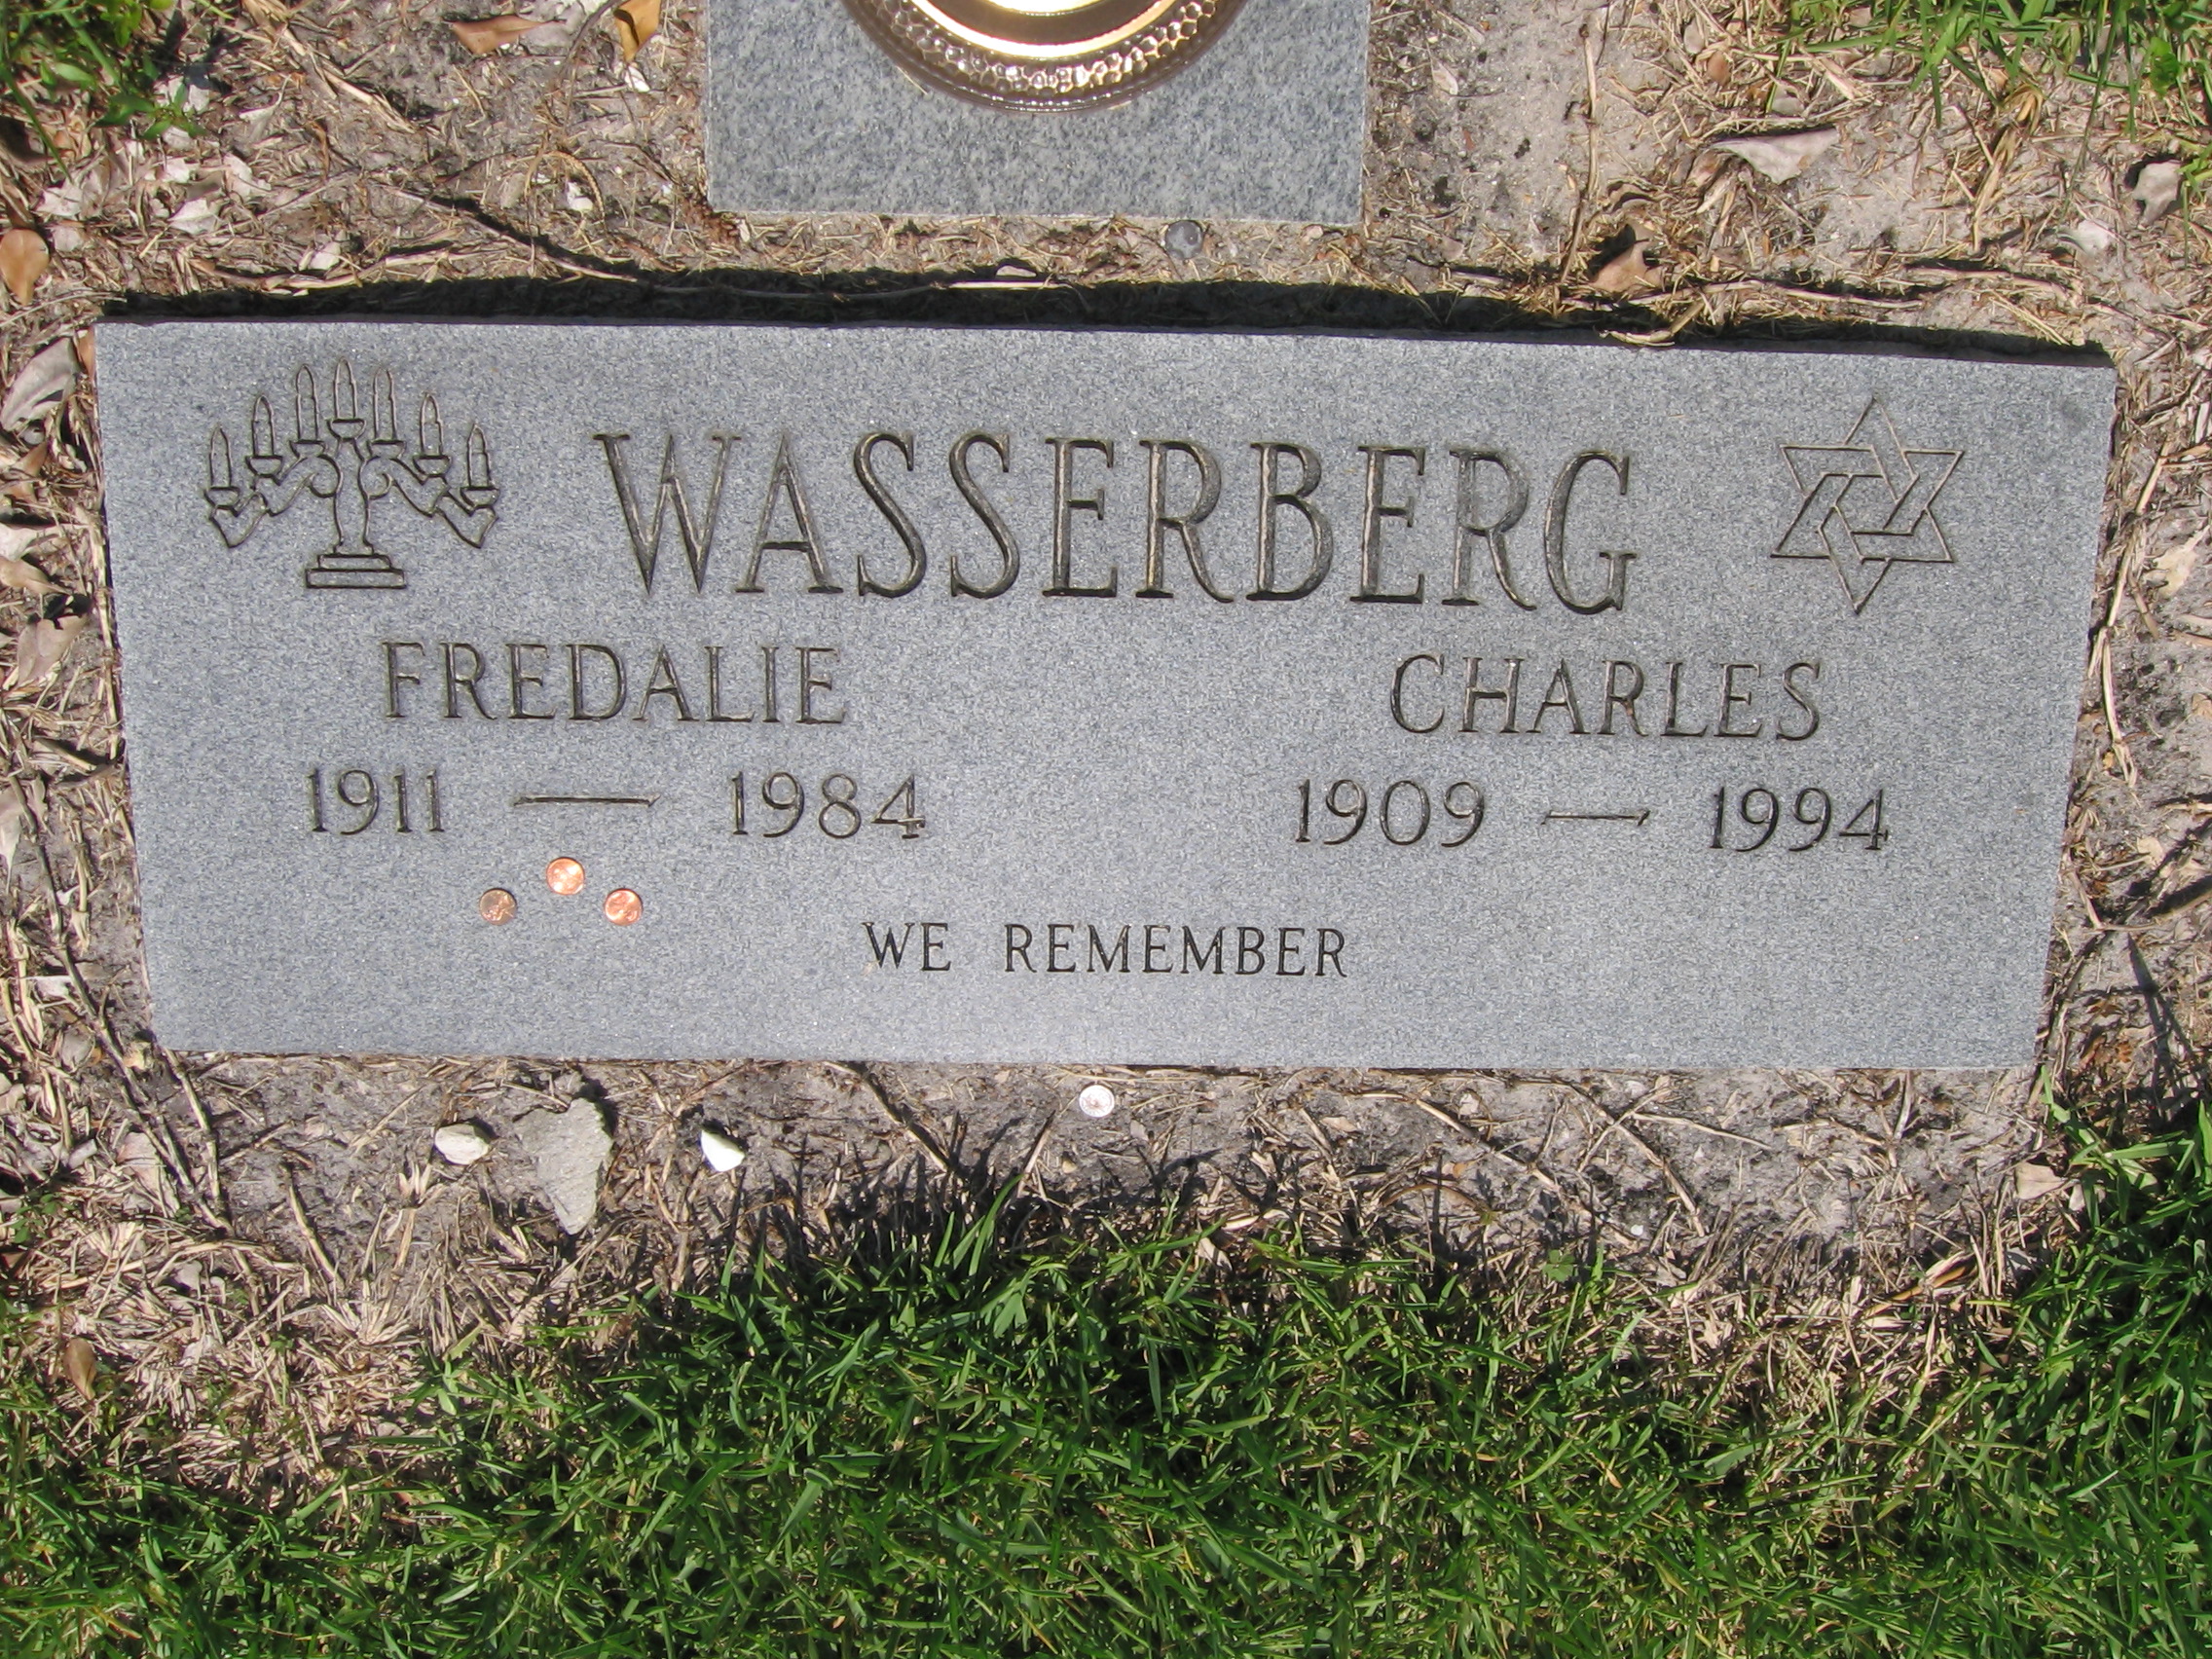 Charles Wasserberg